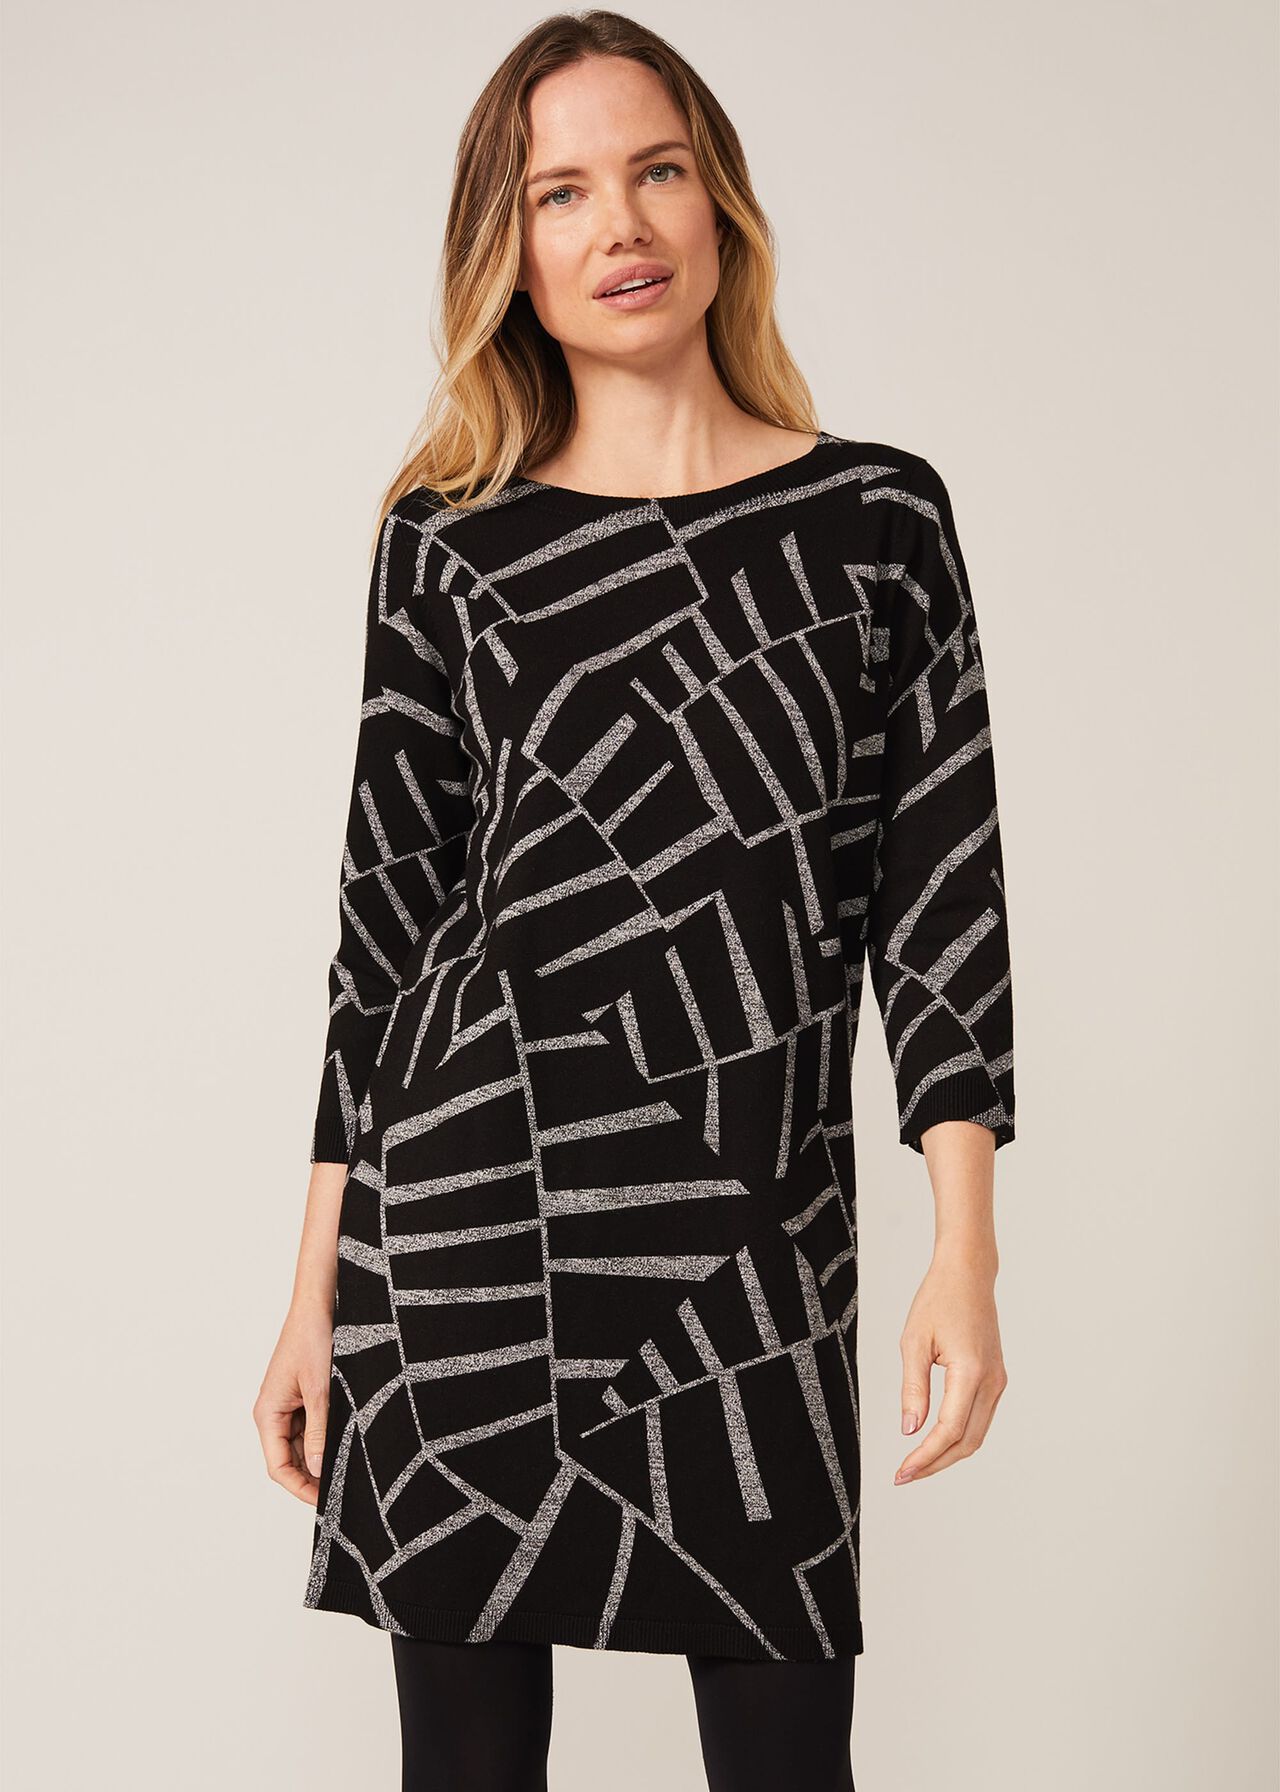 Marthe Abstract Print Knit Dress